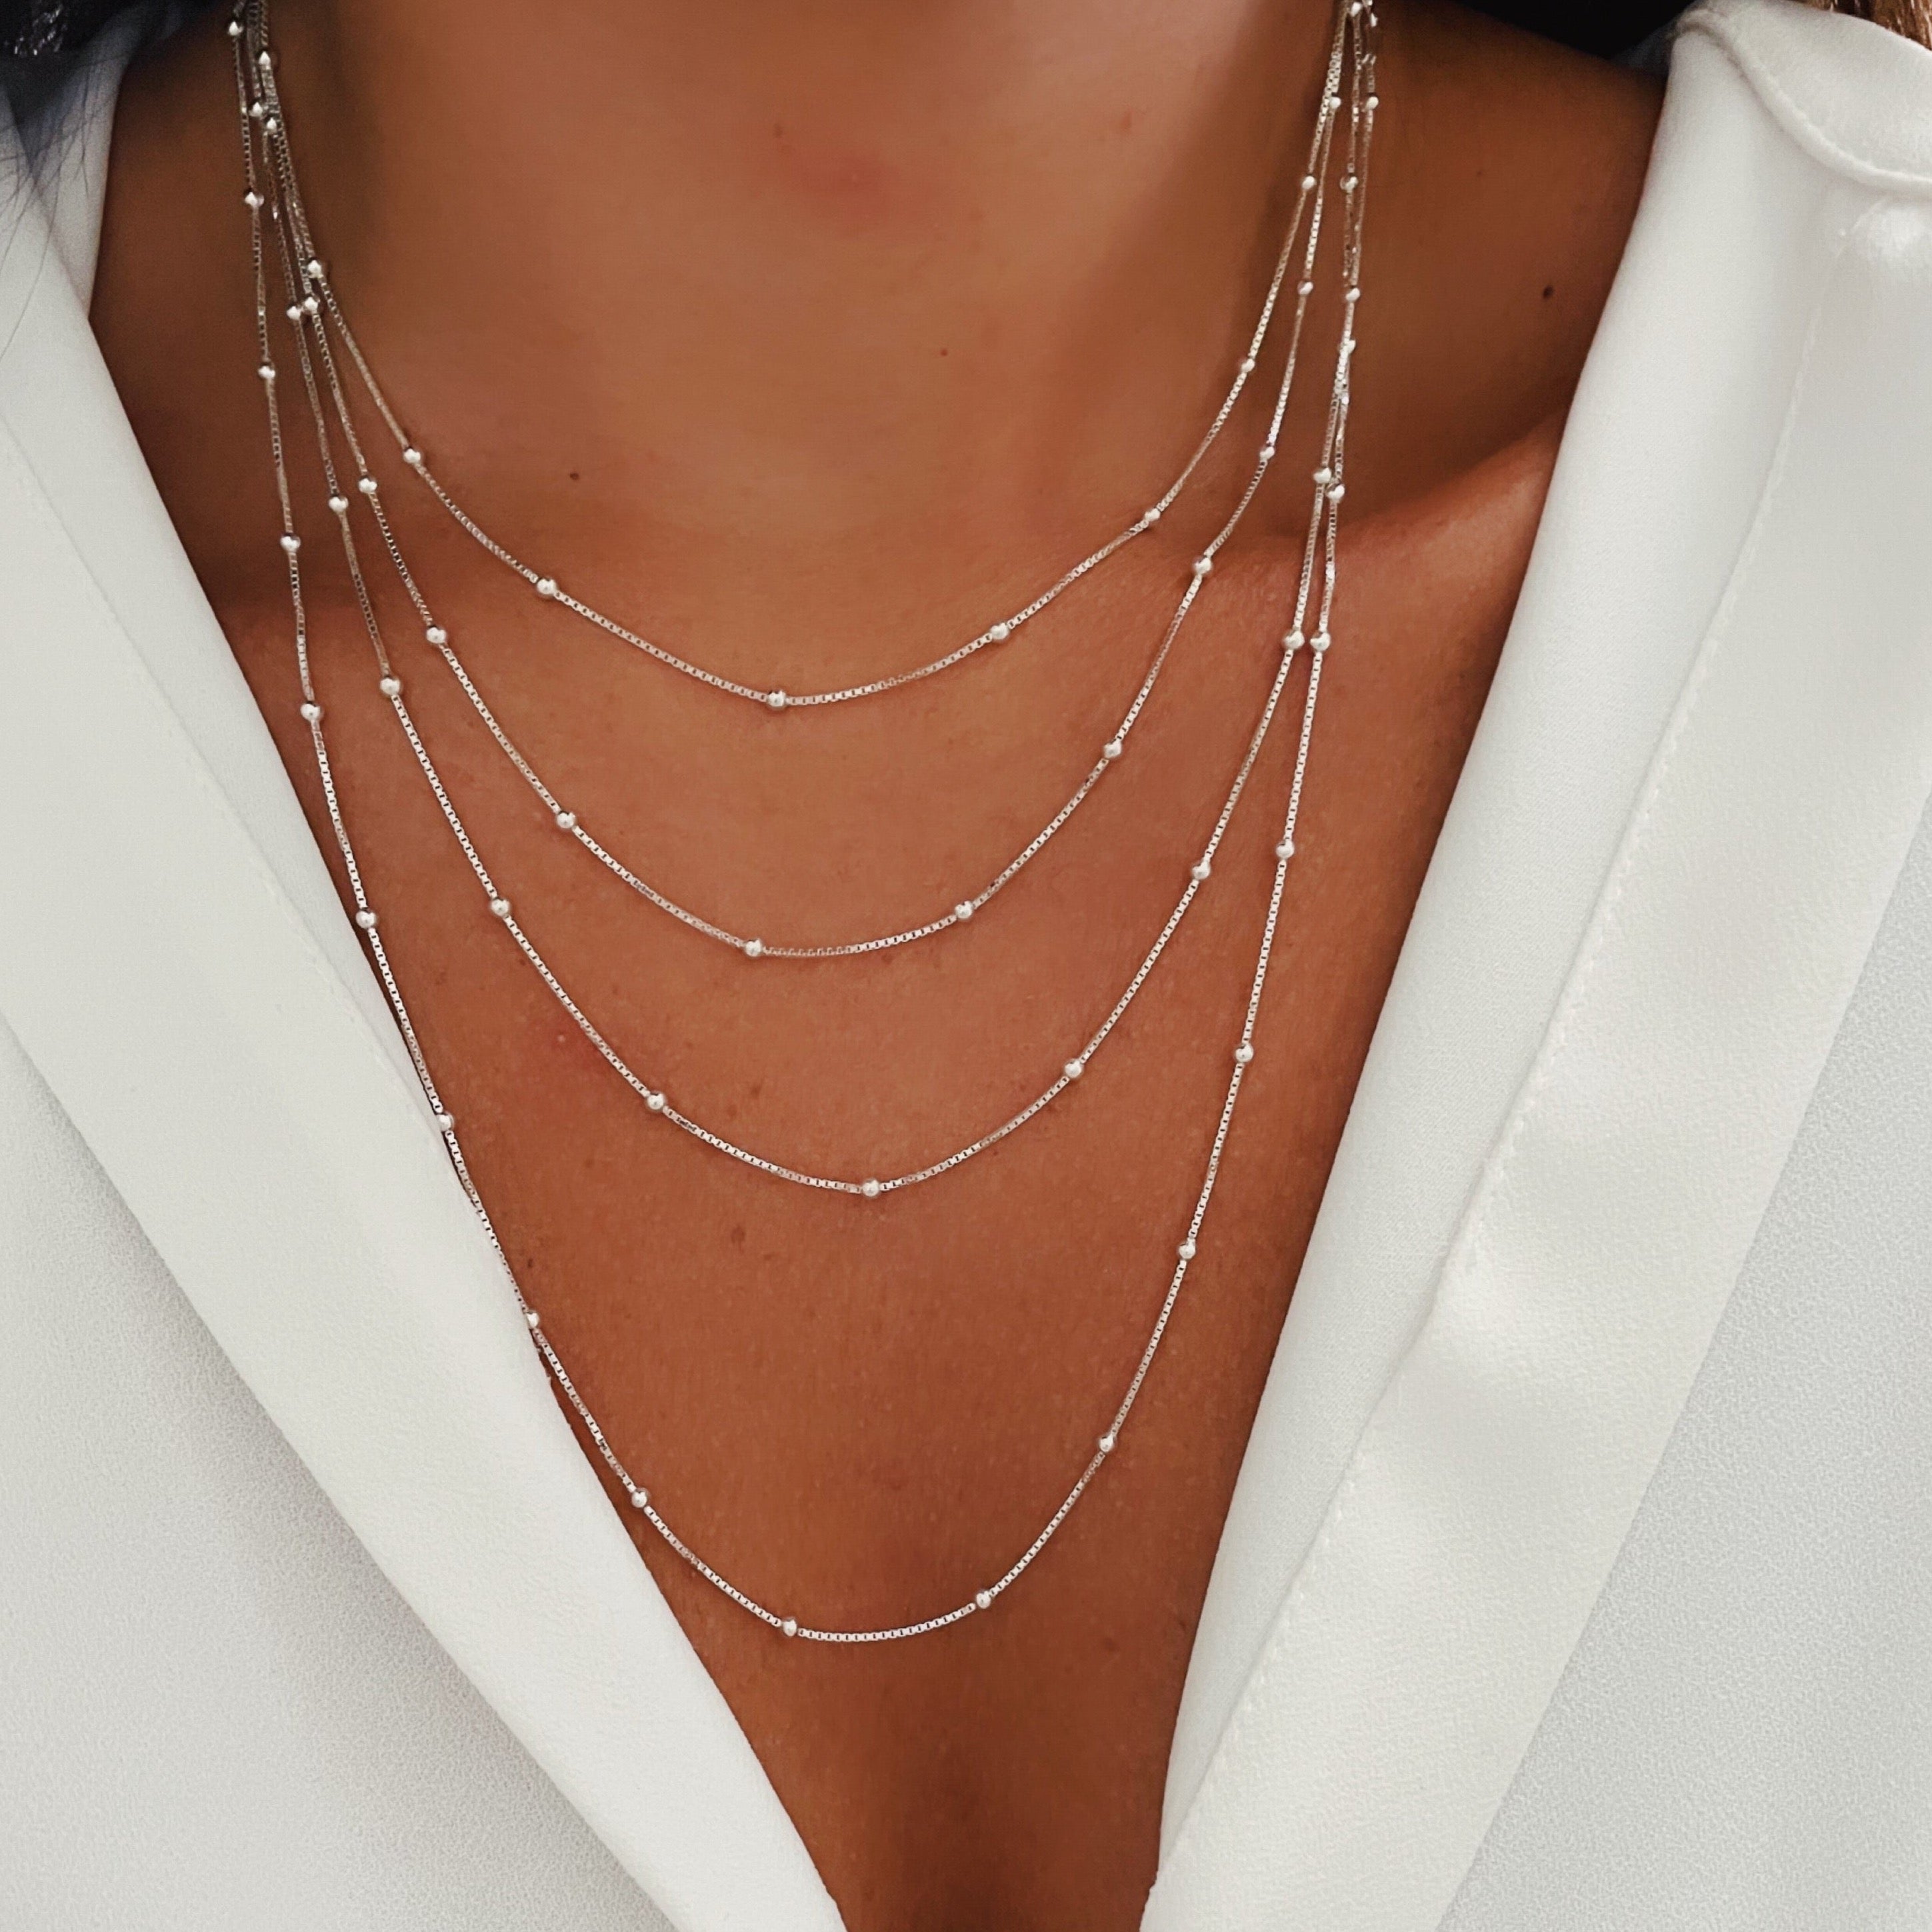 CLAIRE CHAIN – Love Silver 925 Jewelry